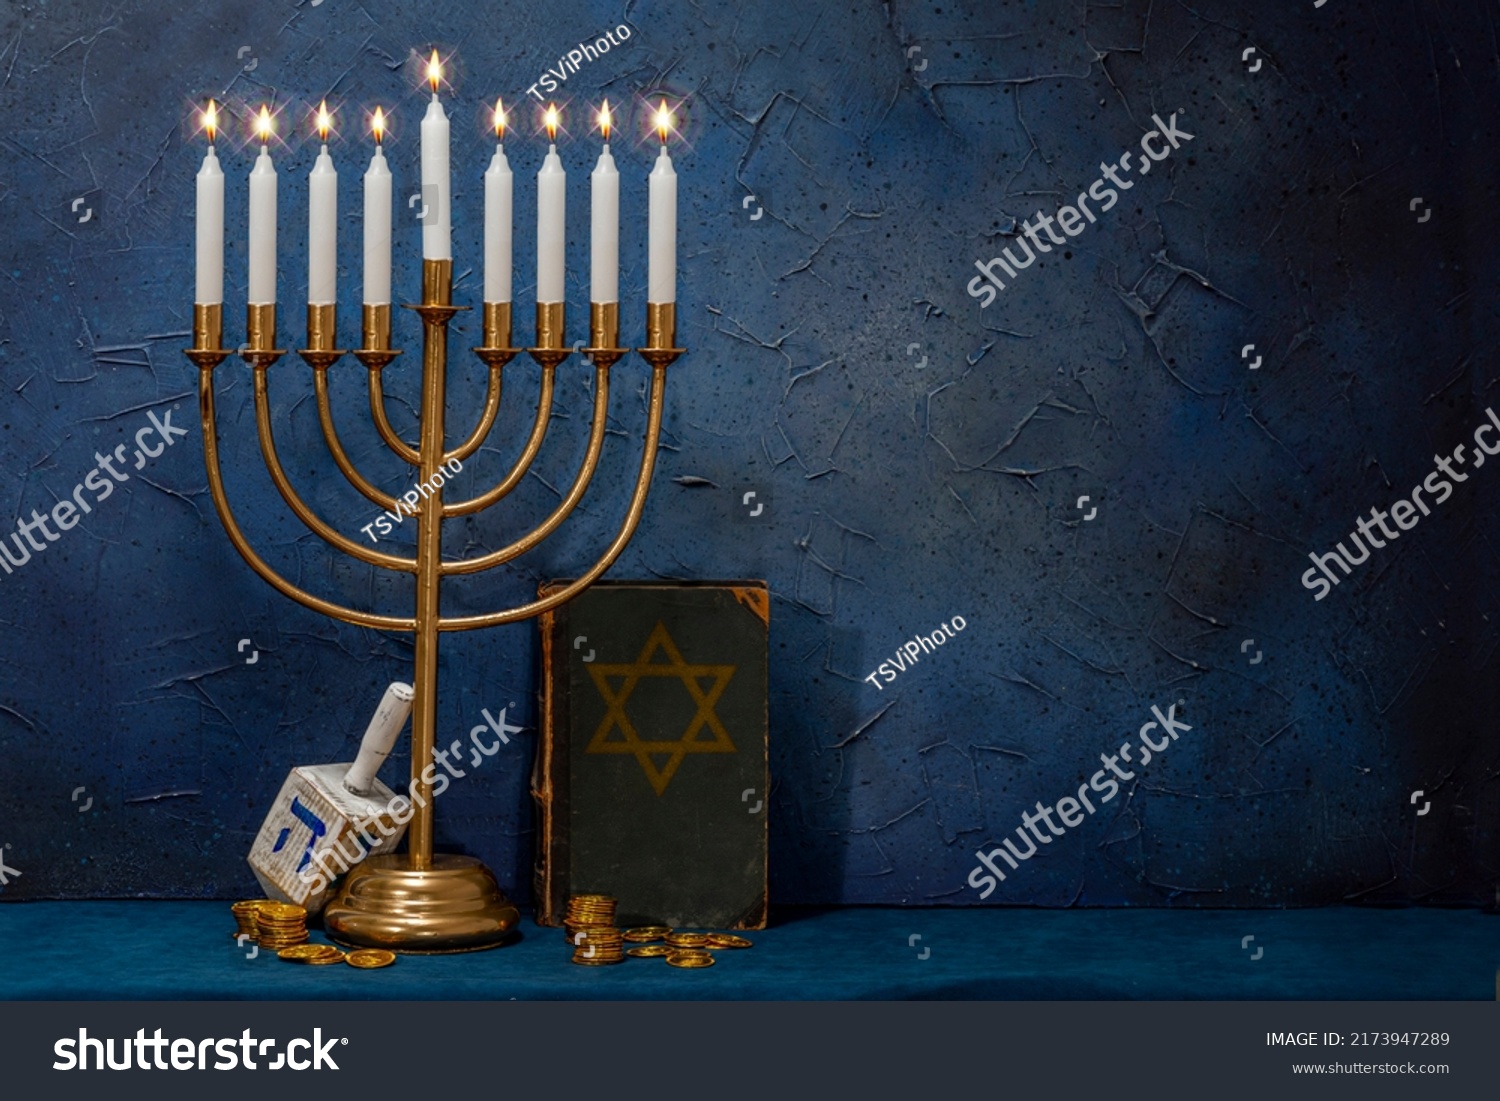 Jewish Hanukkah Menorah, book with star of David, dreidel. Holiday Candle Holder, dreidl, Talmud, or Torah. Nine-arm candlestick. Traditional Hebrew Festival of Lights candelabra. Сopy space. #2173947289